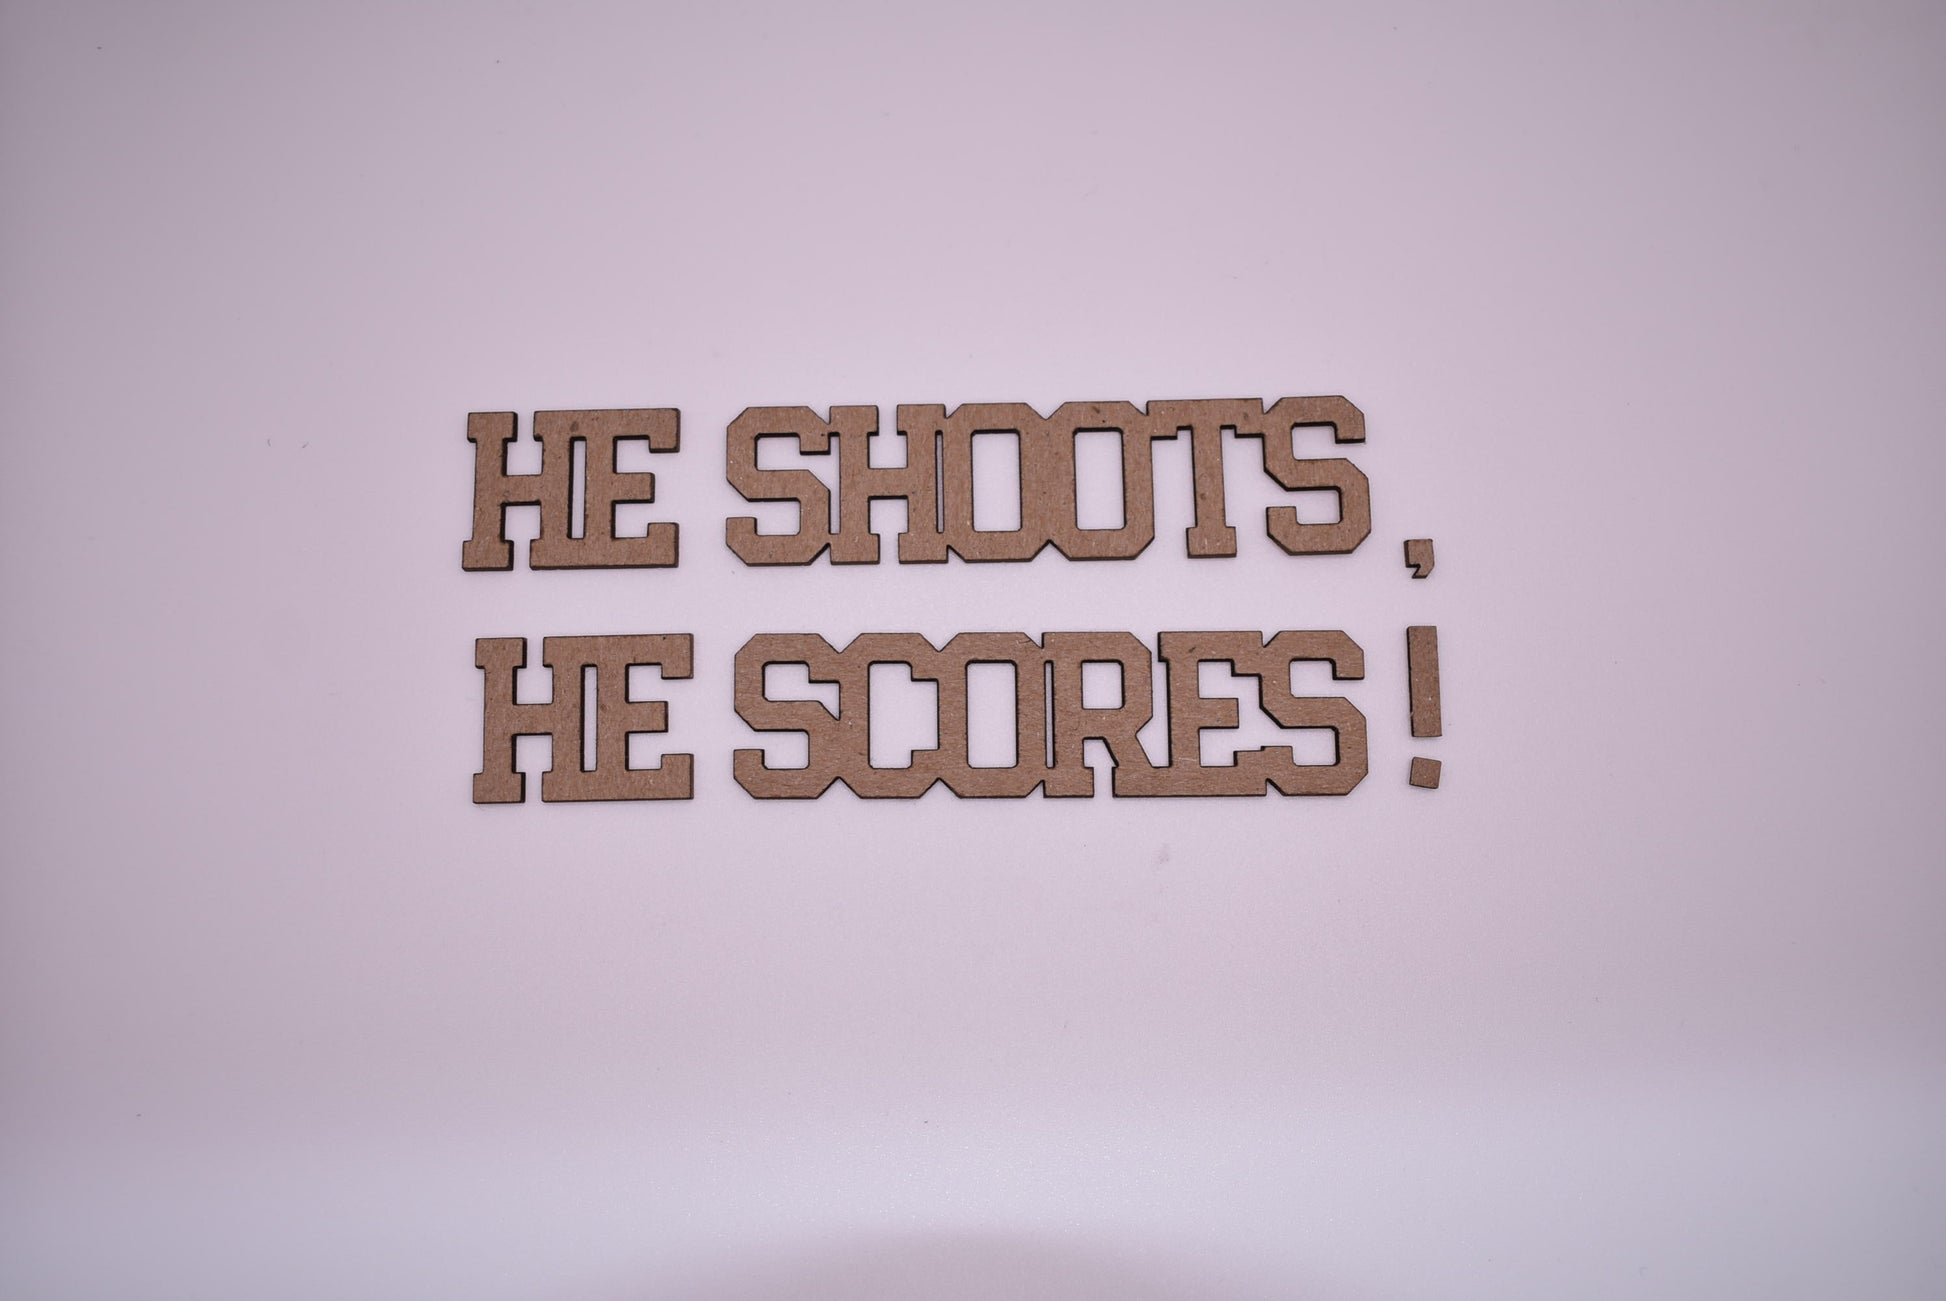 He shoots, he scores! - Creative Designs By Kari